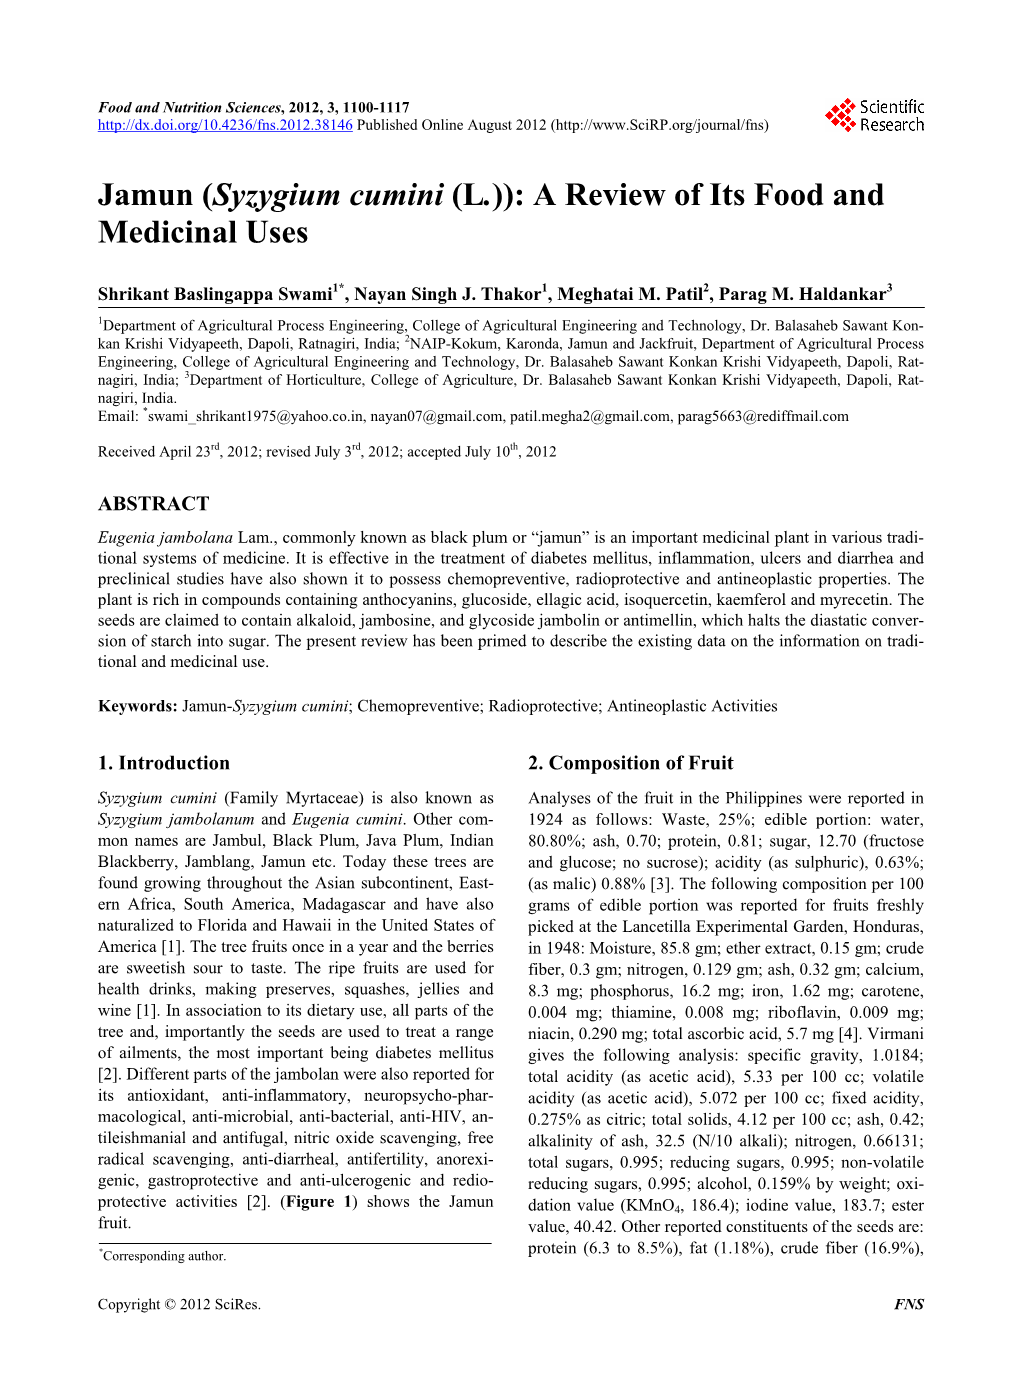 Jamun (Syzygium Cumini (L.)): a Review of Its Food and Medicinal Uses